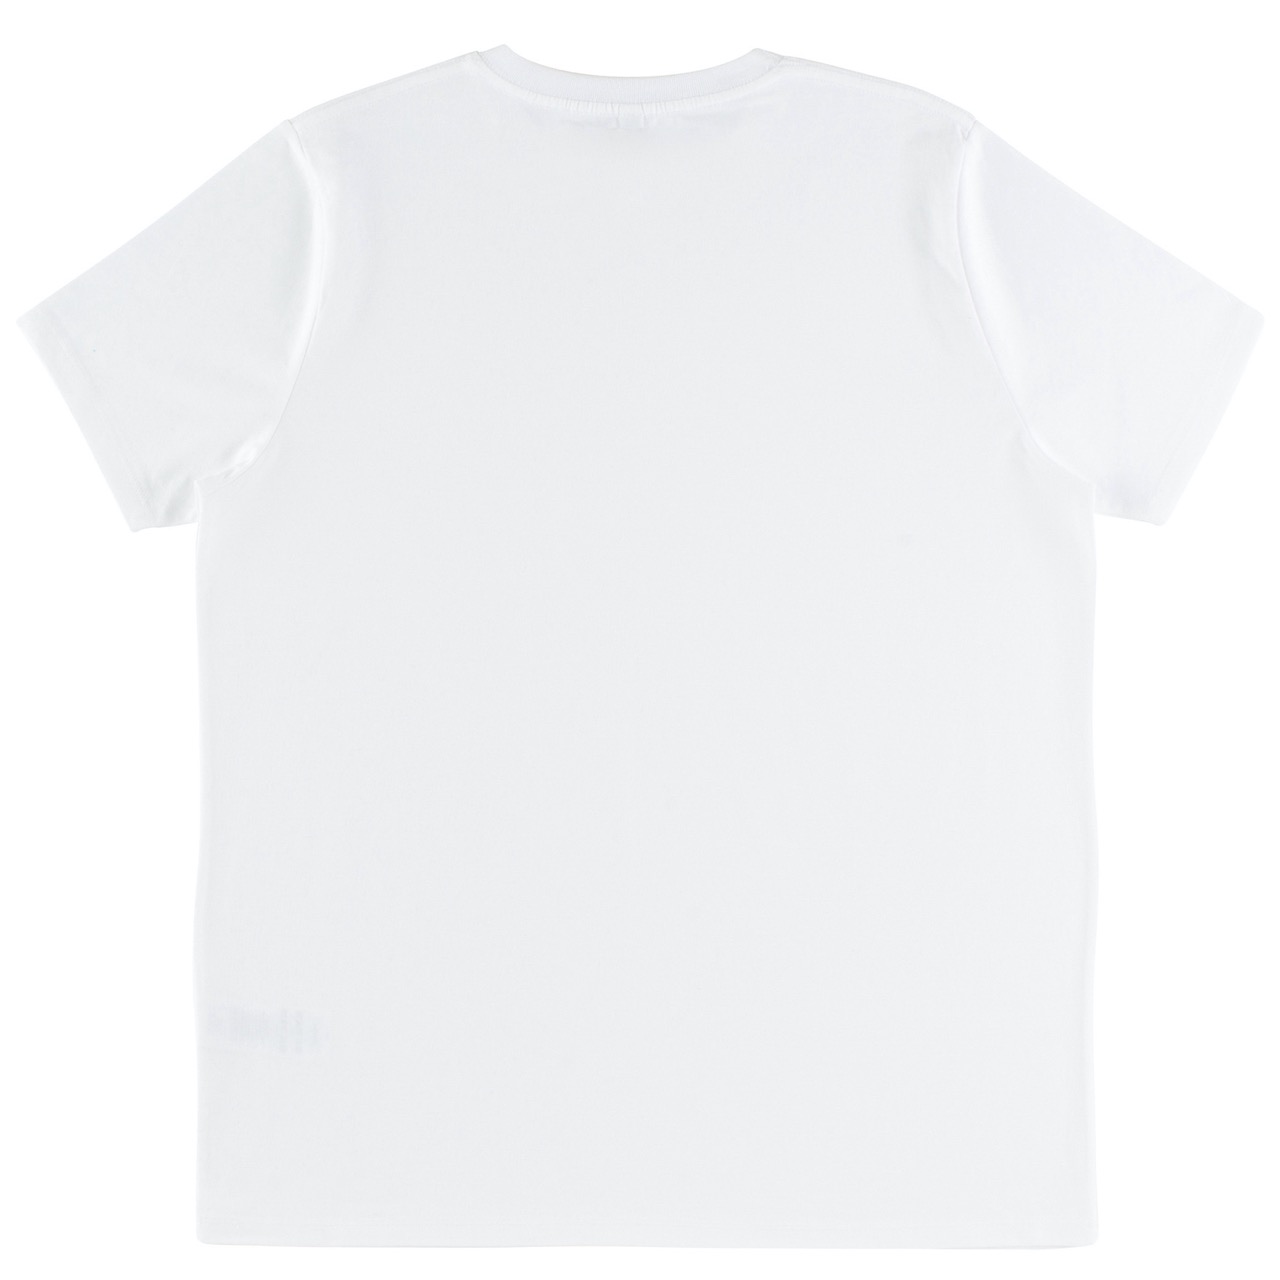 Camiseta blanca manga corta algodón ogánico - Holocene Classics